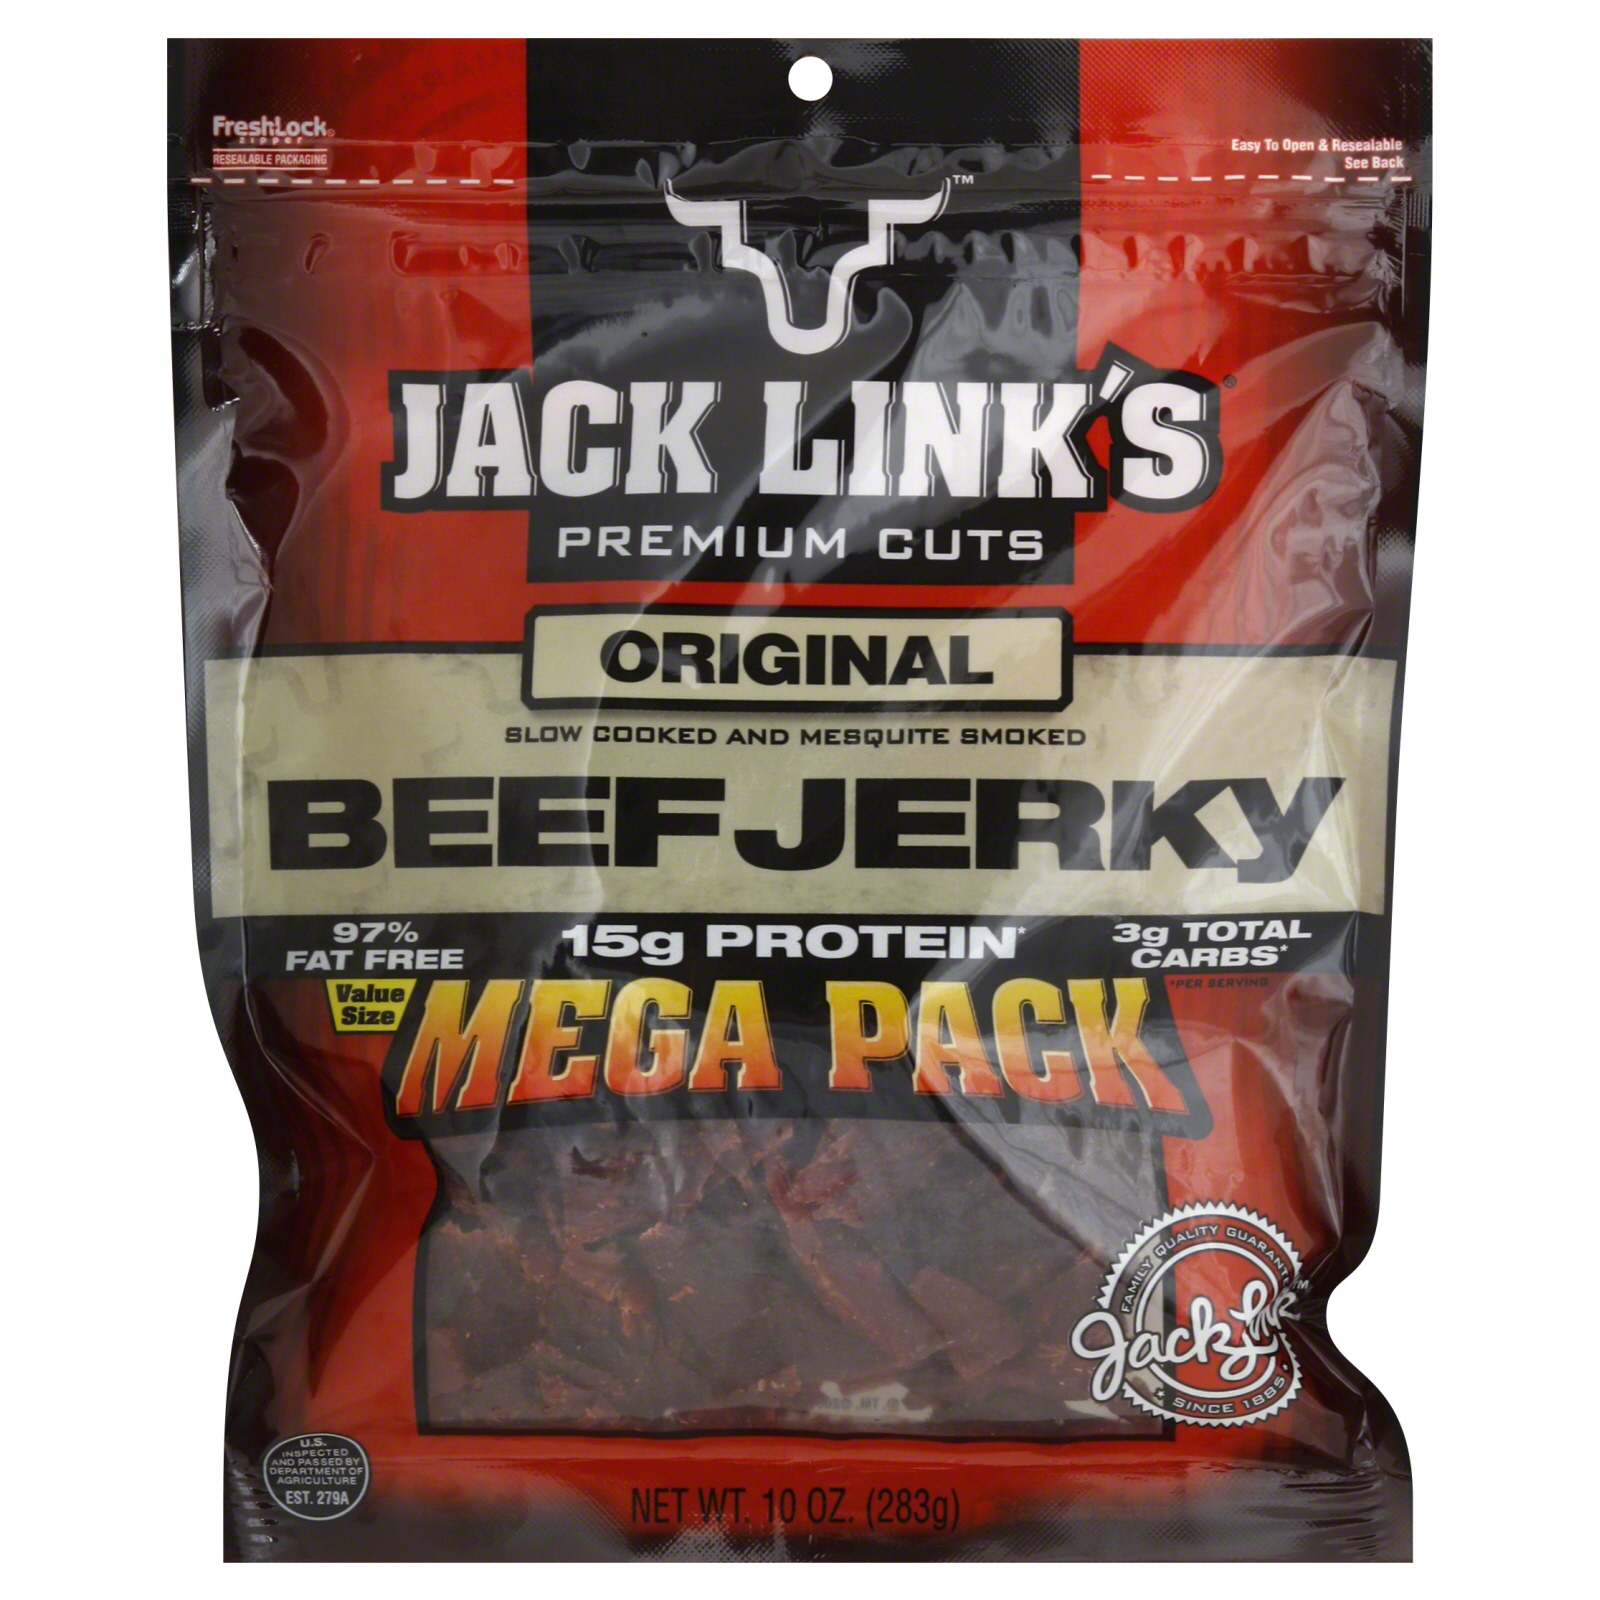 Jack Link's Premium Cuts Beef Jerky, Original, Mega Pack, Value Size 10 oz (283 g)